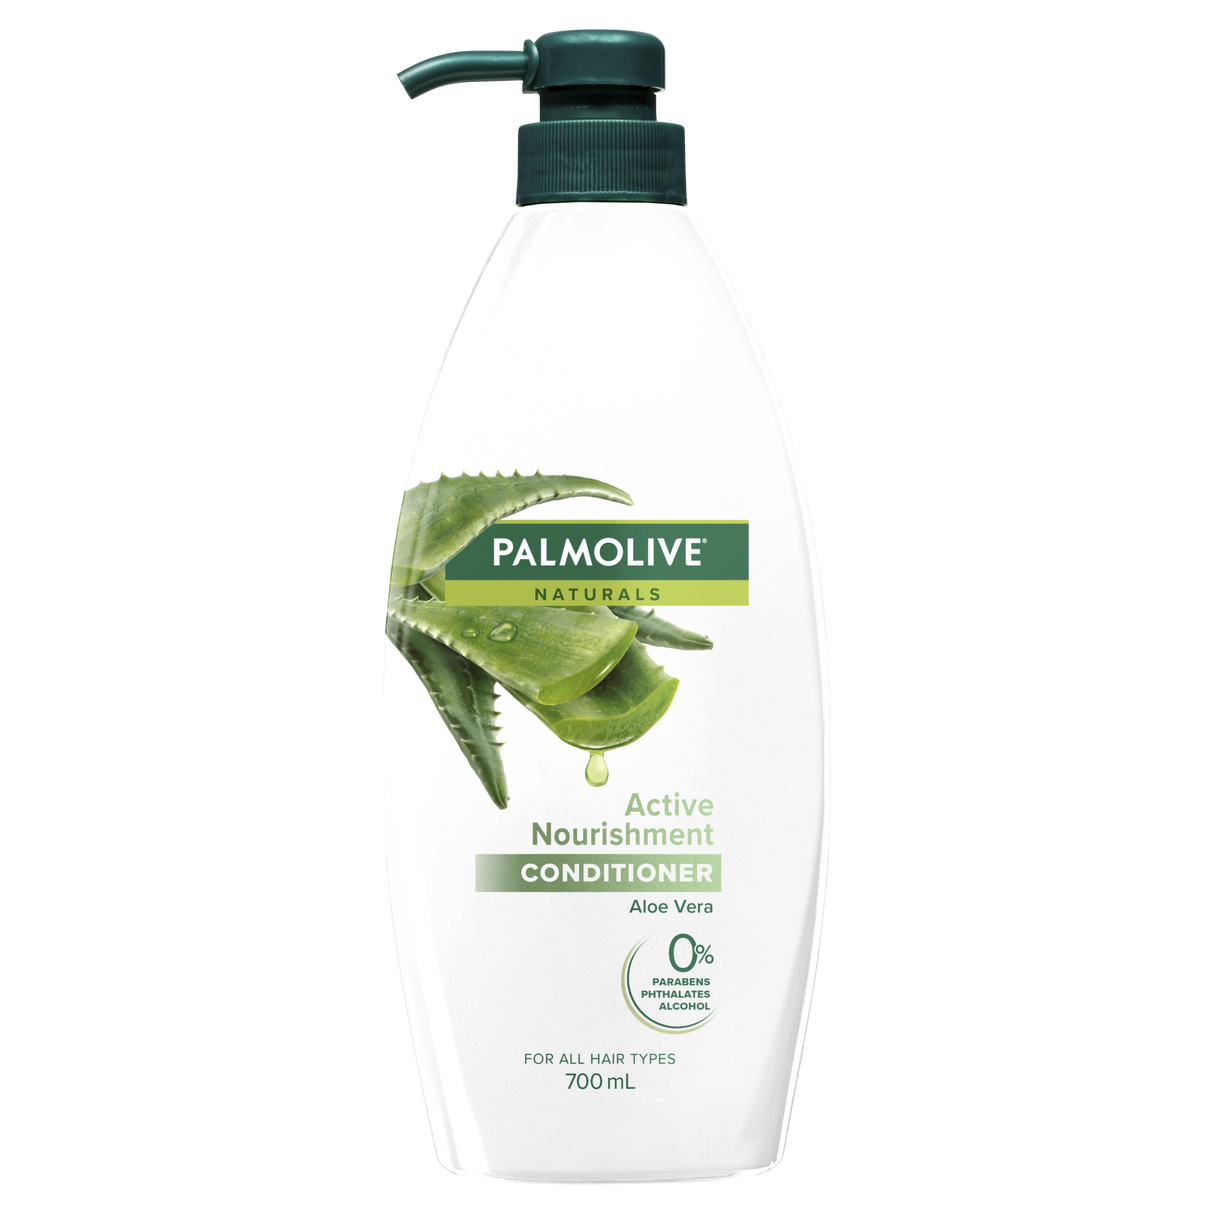 Palmolive Naturals Hair Conditioner Active Nourishment Aloe Vera 700ml